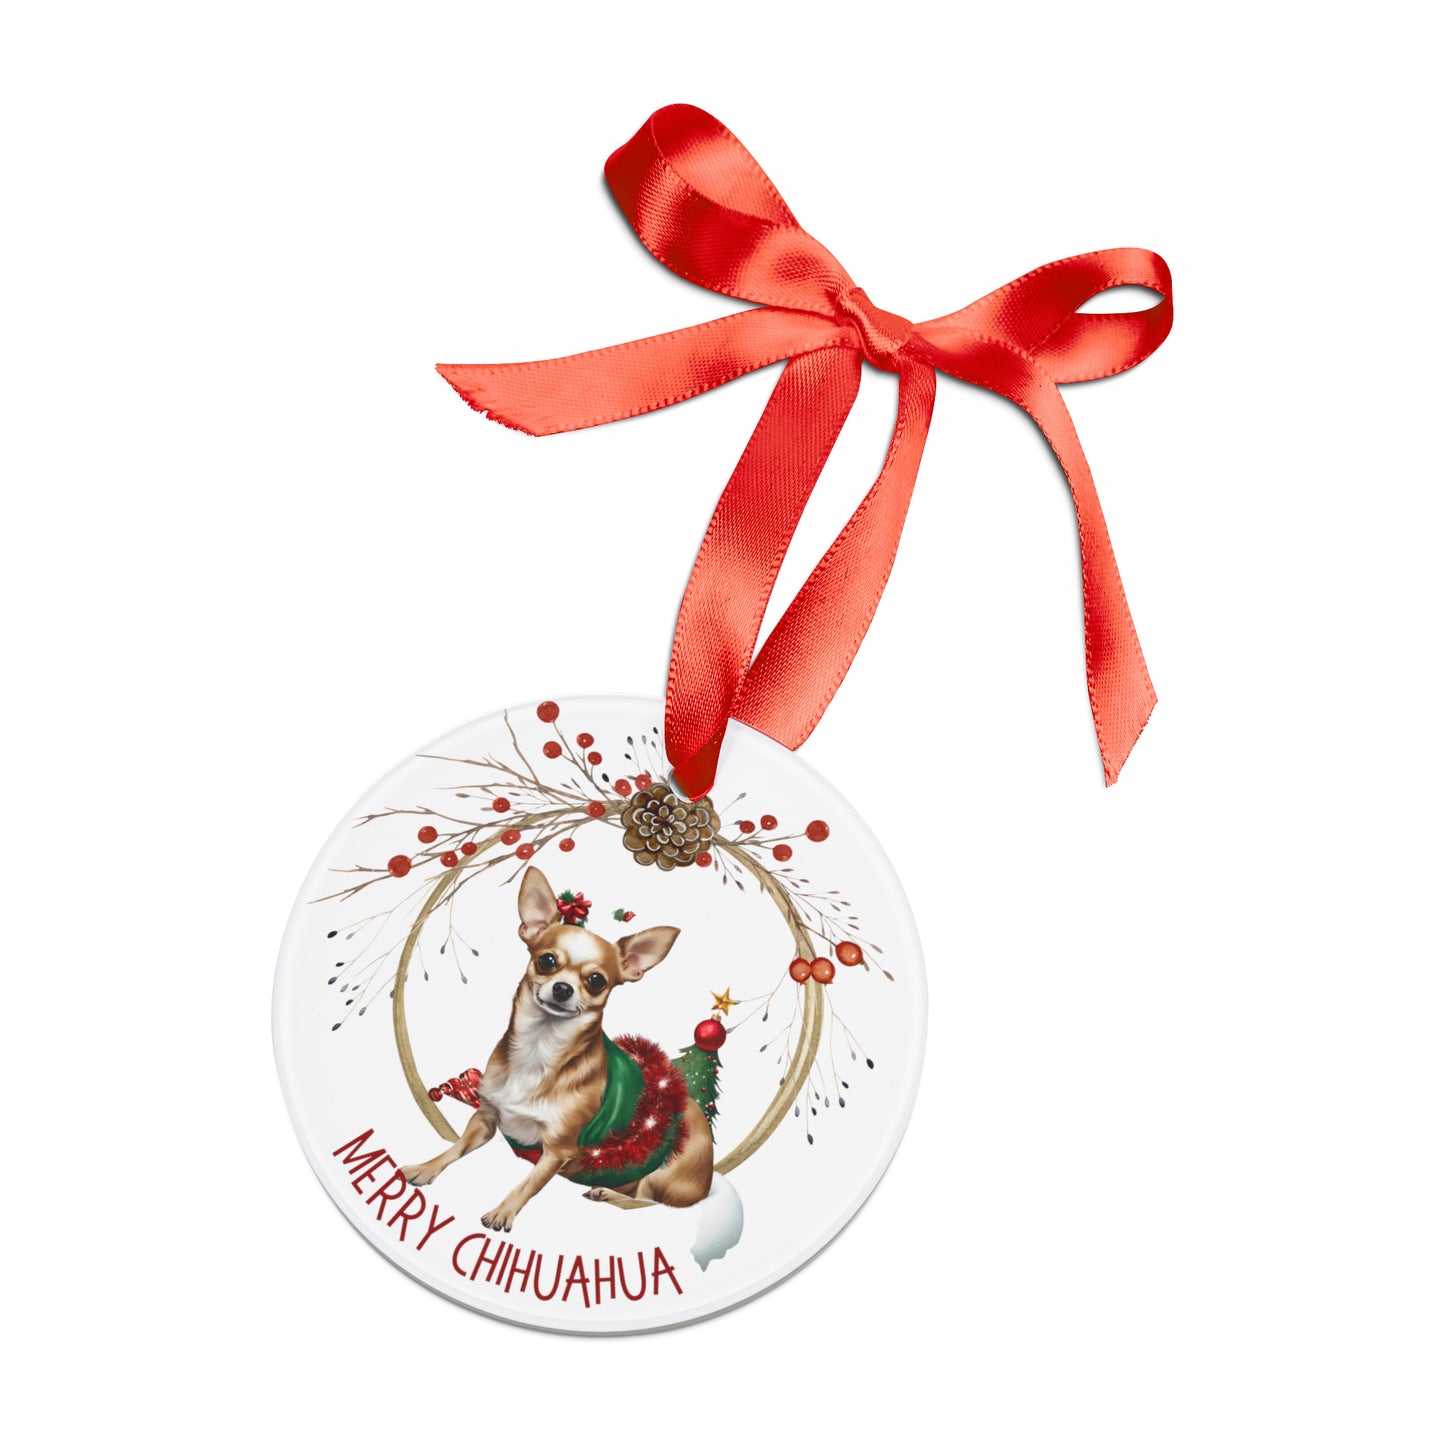 Chihuahua Holiday Ornament with Ribbon